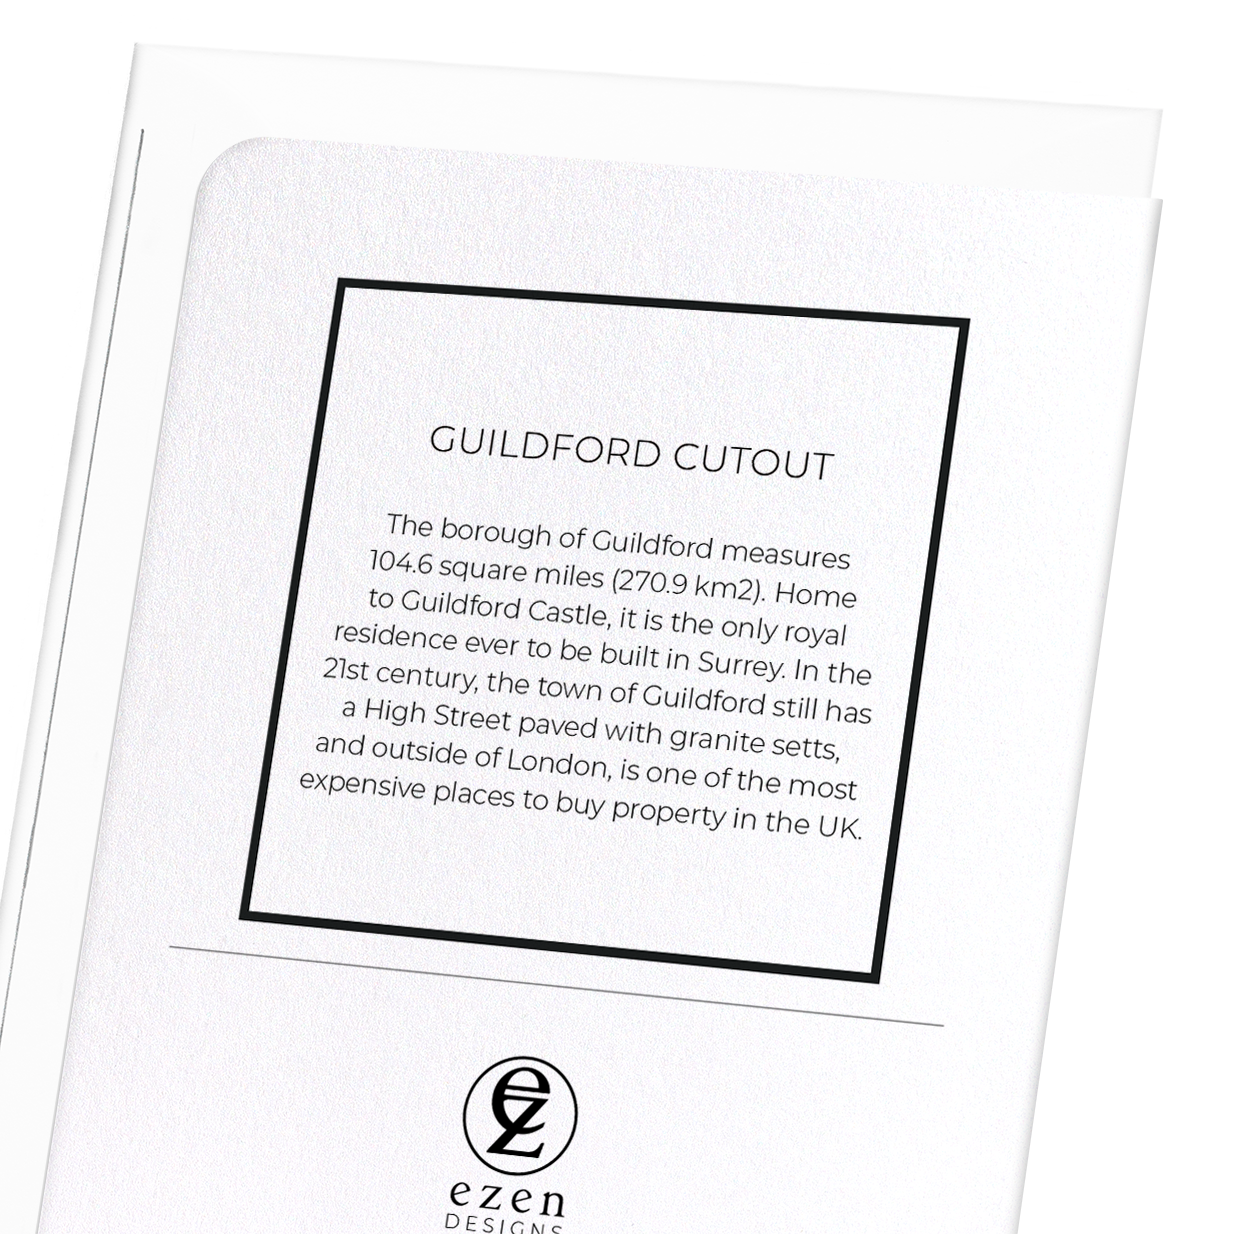 GUILDFORD CUTOUT